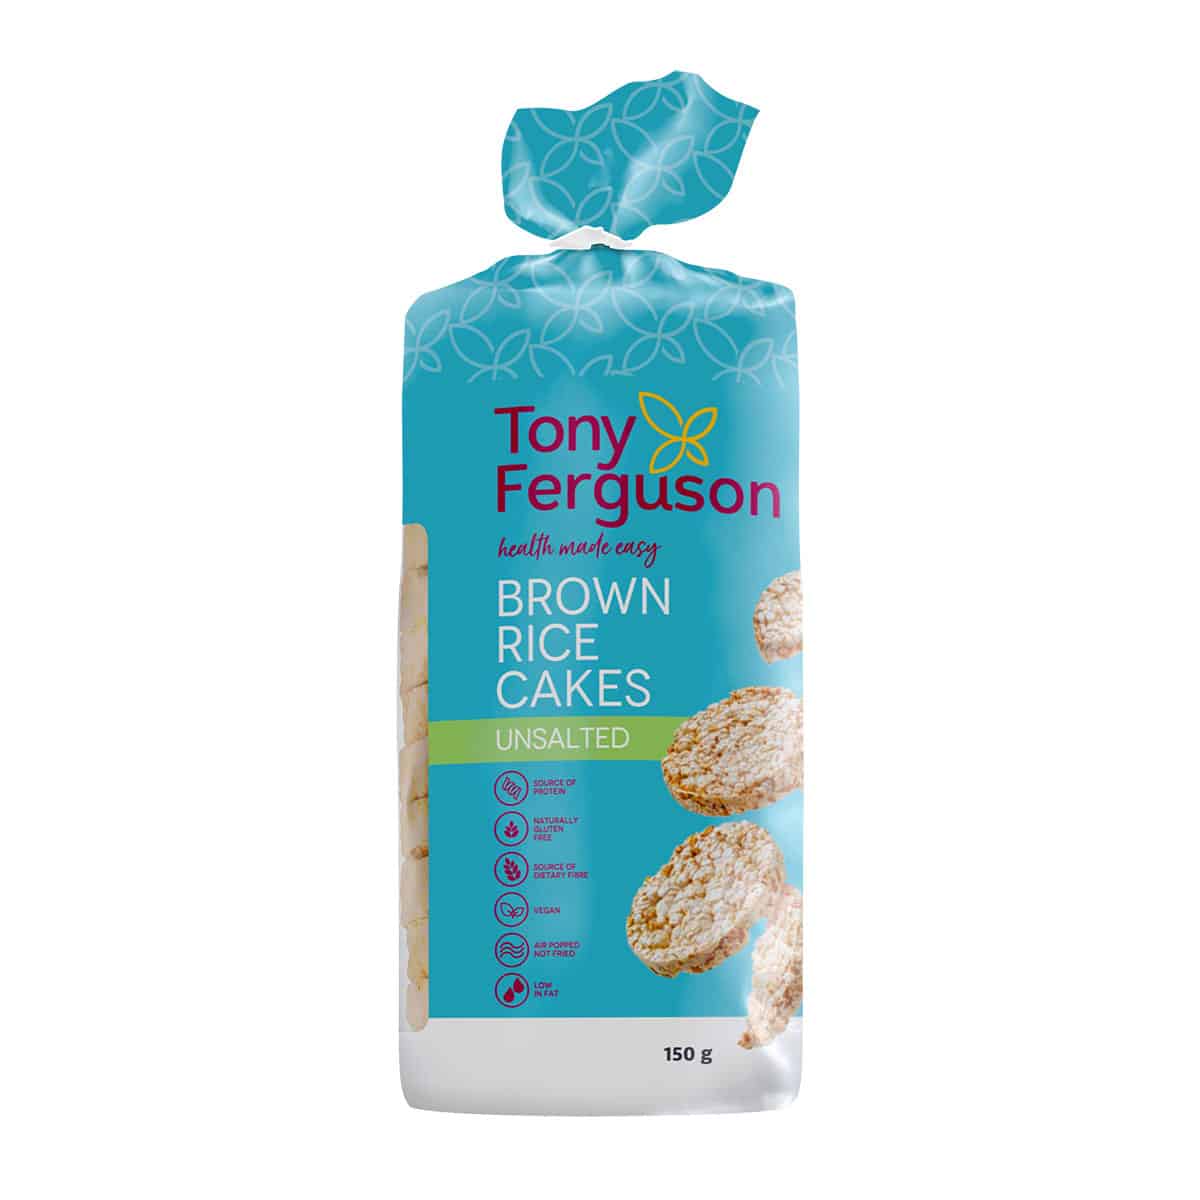 Tony Ferguson Brown Rice Cakes Unsalted - 150g